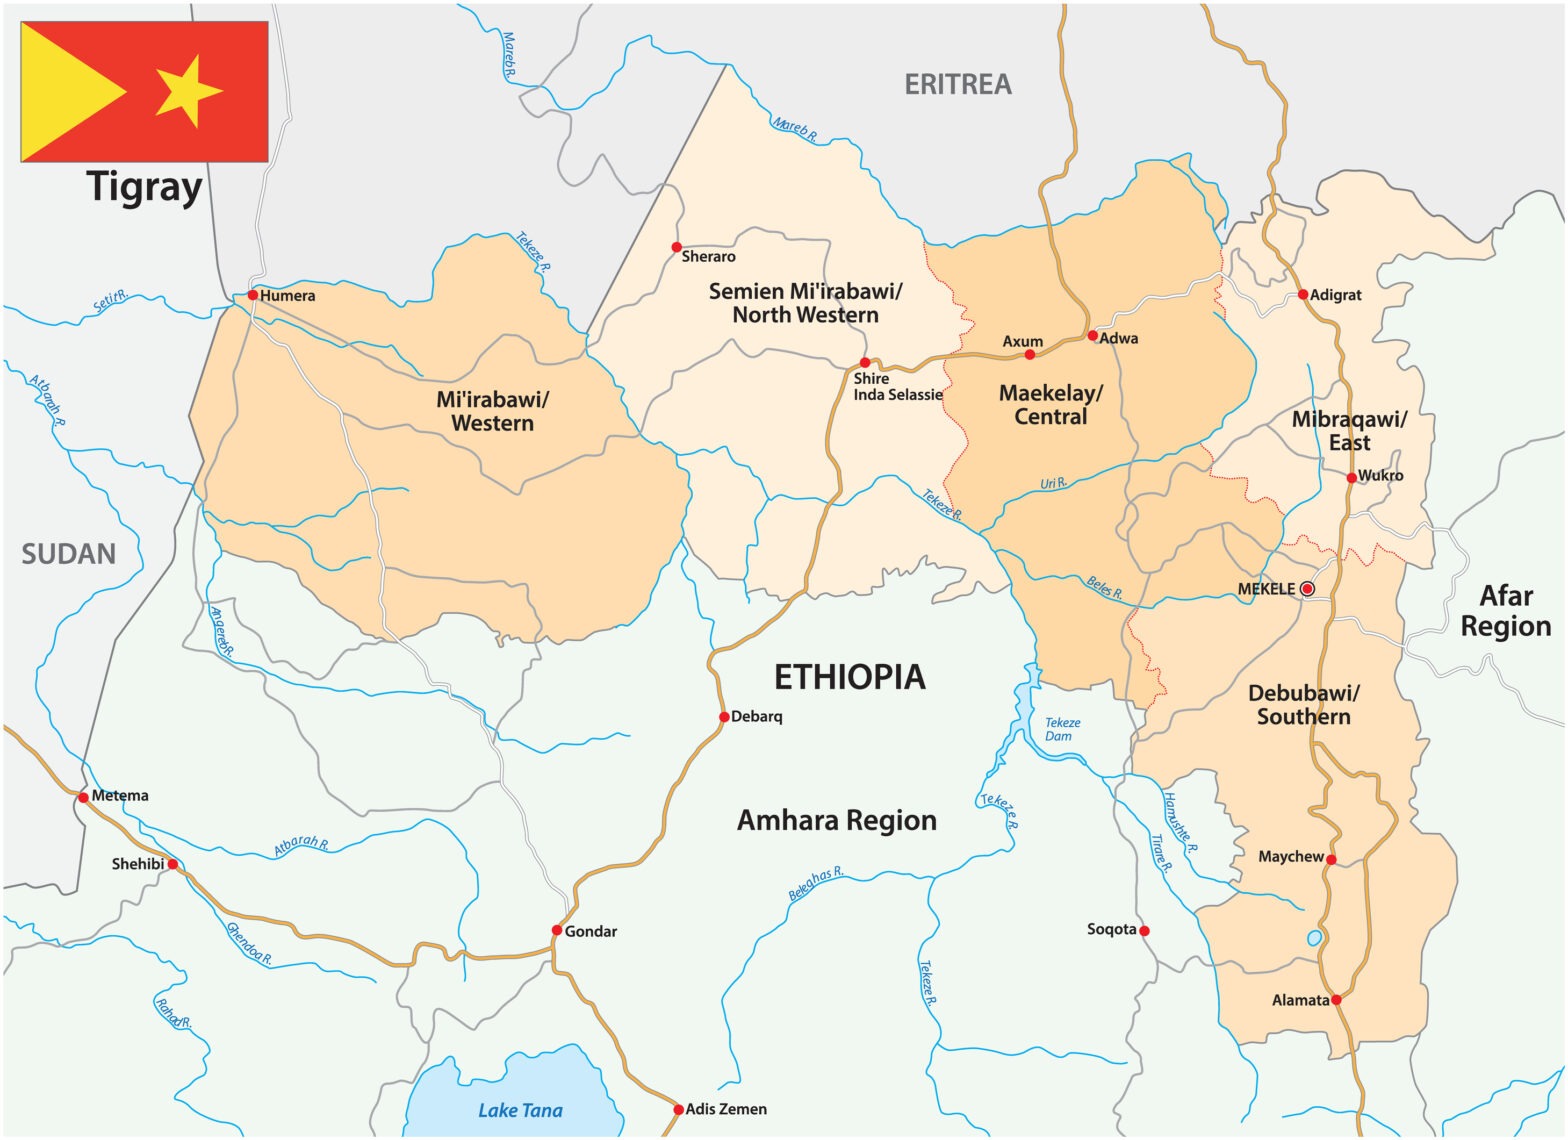 Eritrean refugees